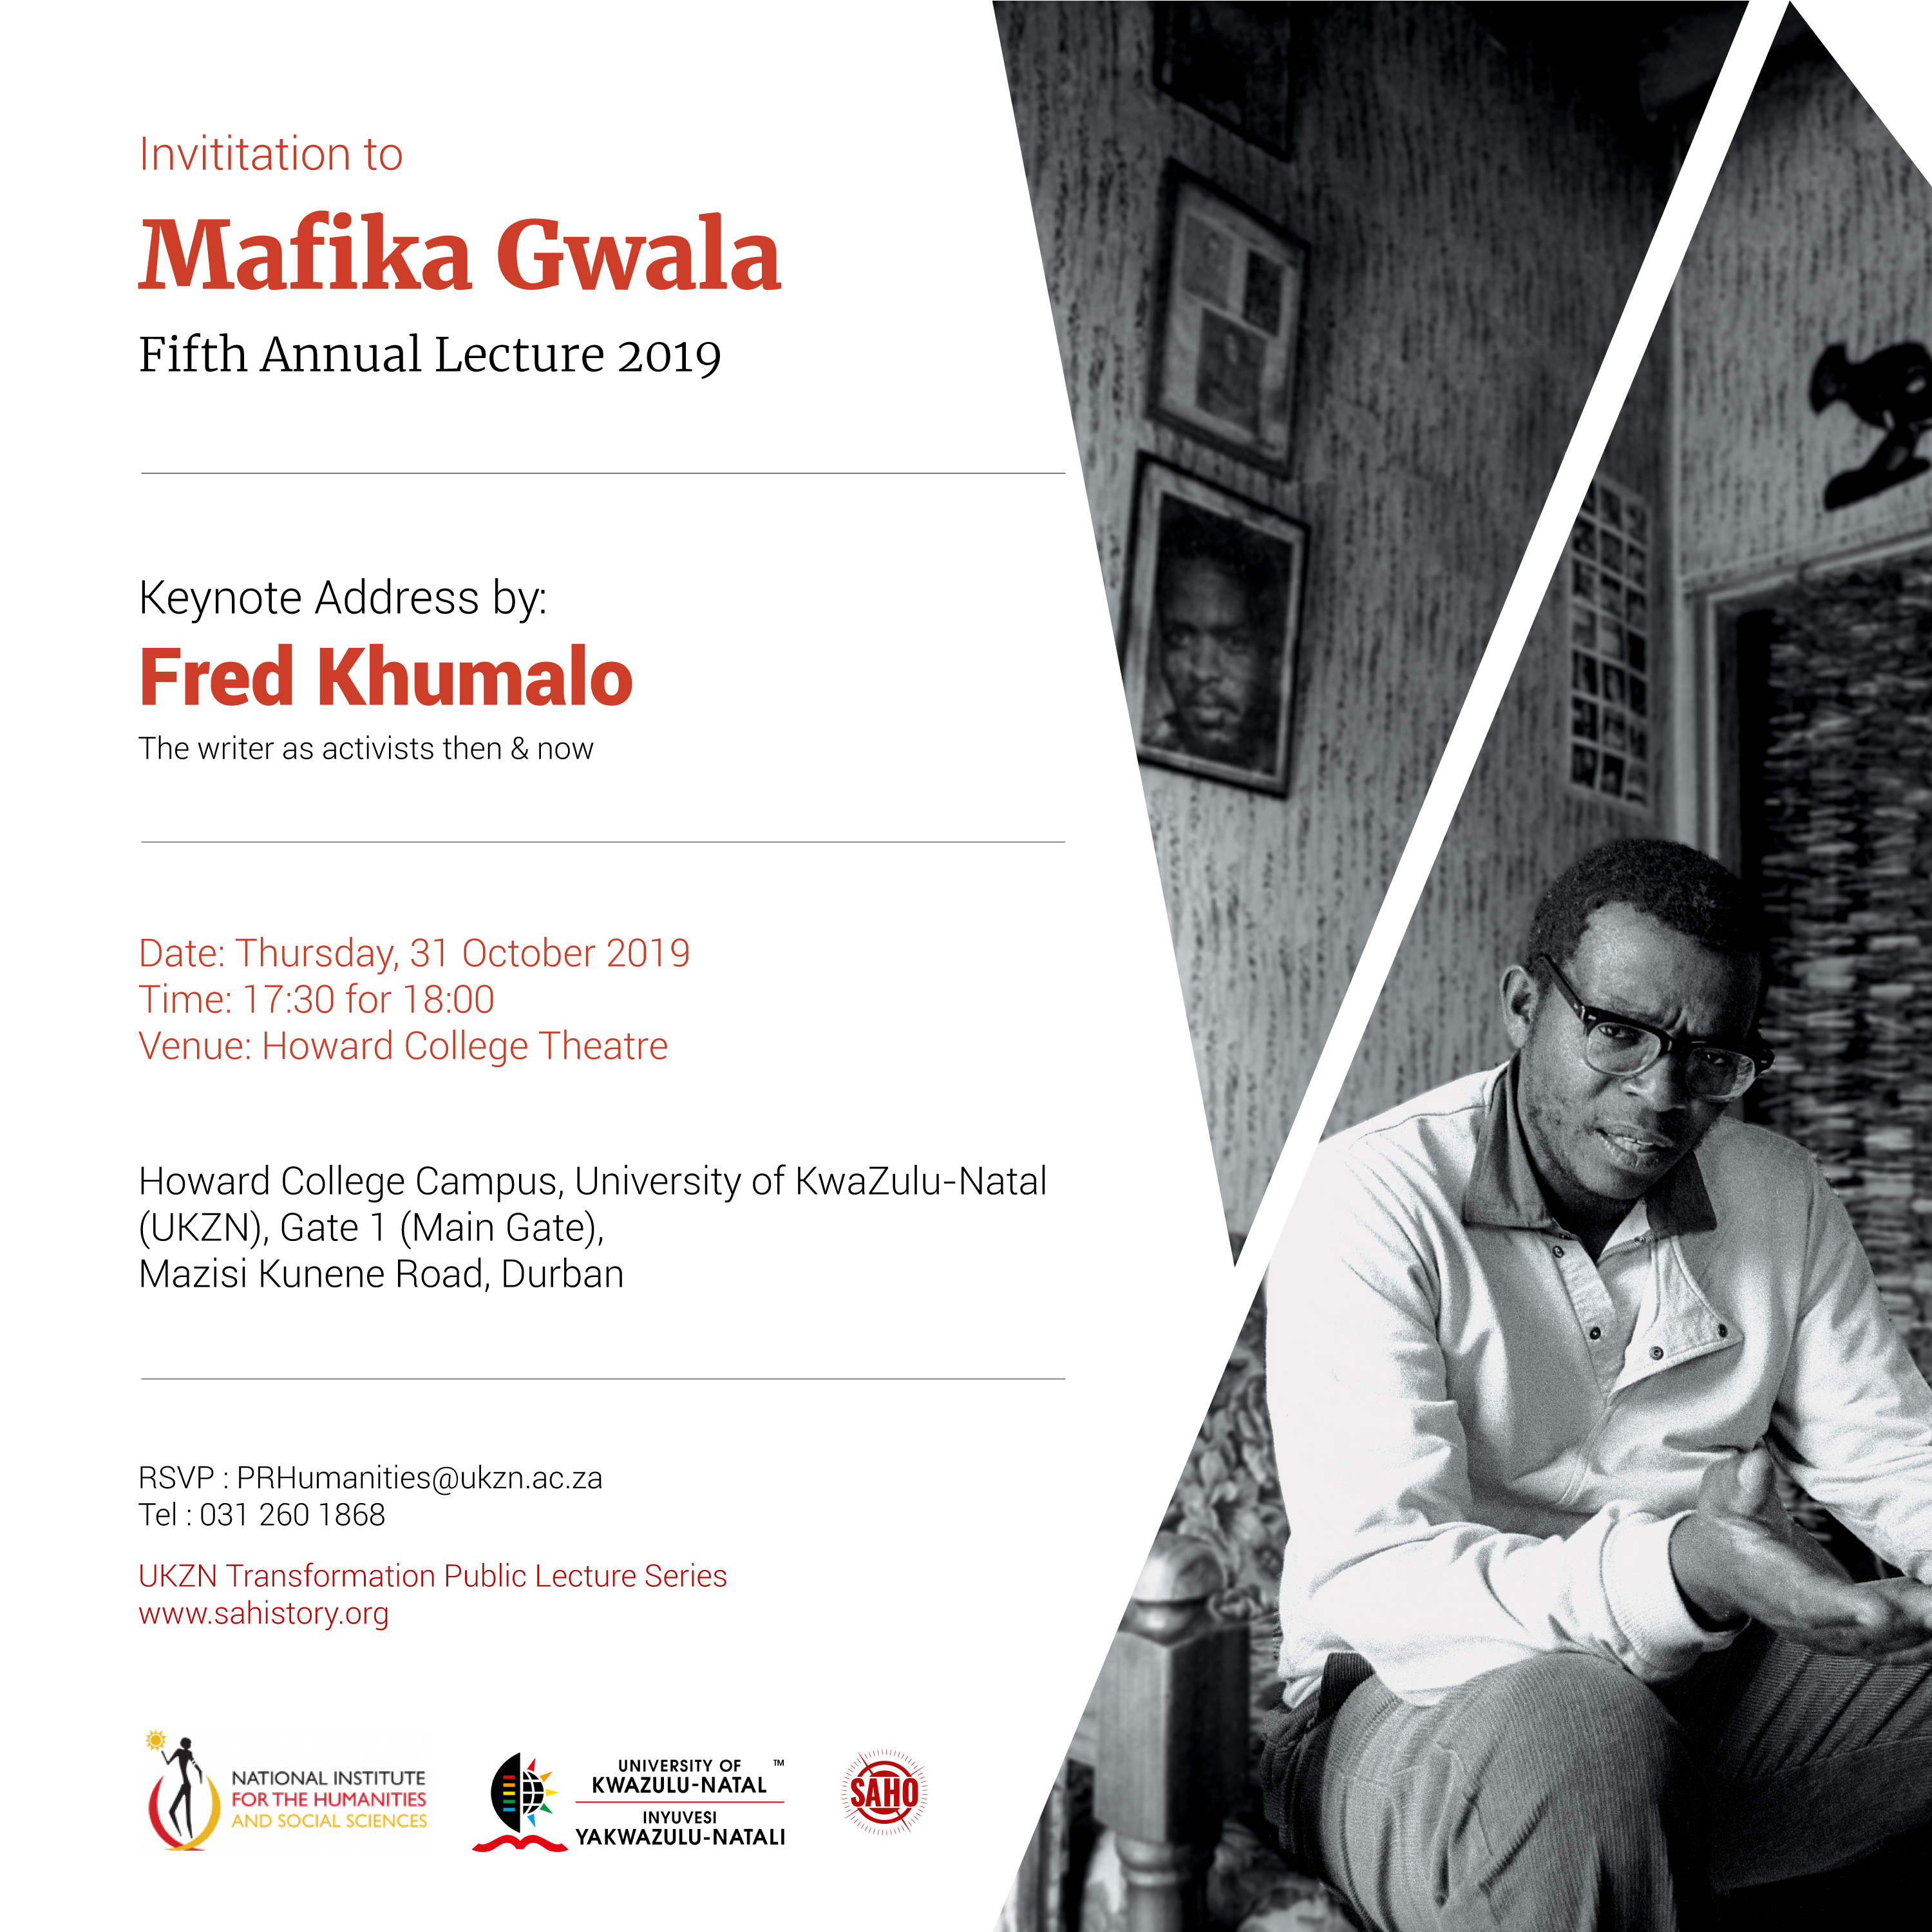 Mafika Gwala Fifth Annual Lecture 2019